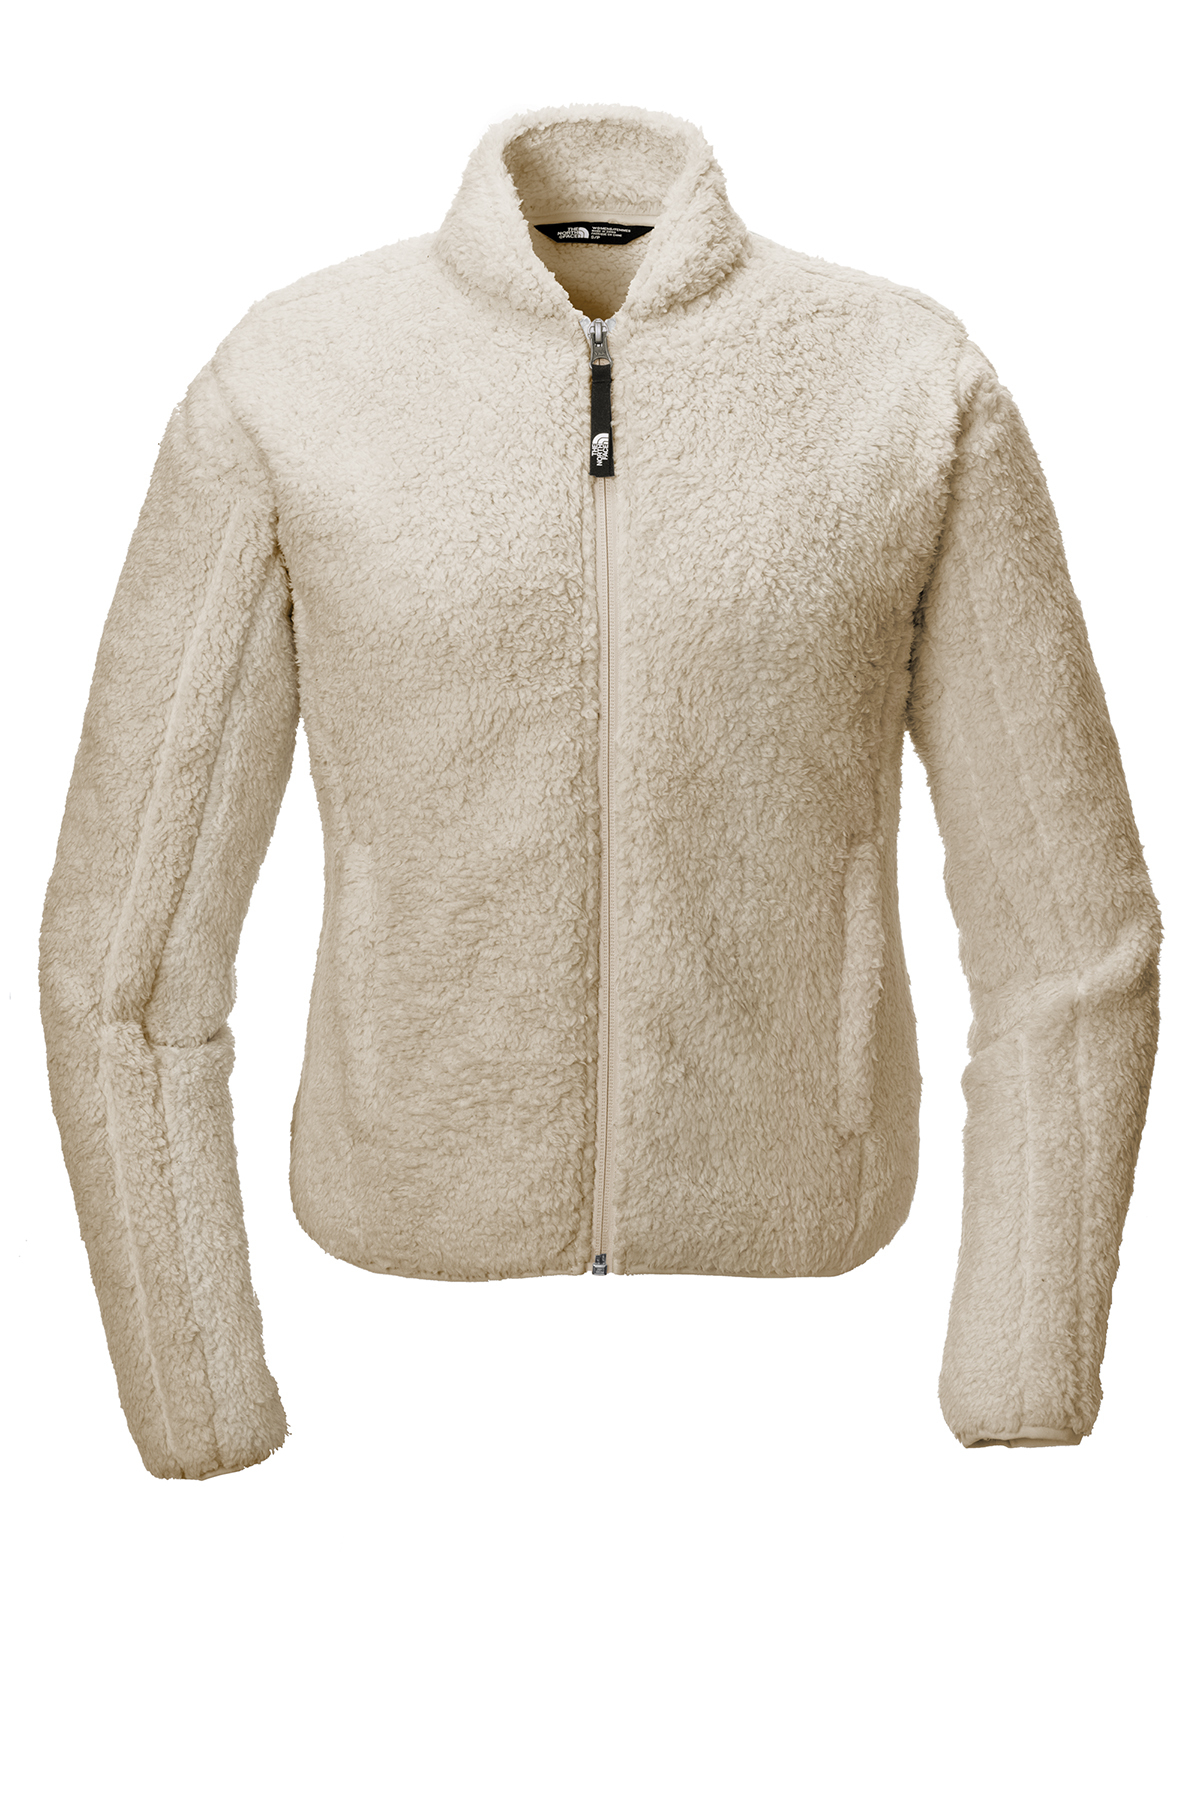 The North Face Ladies High Loft Fleece | Product | SanMar